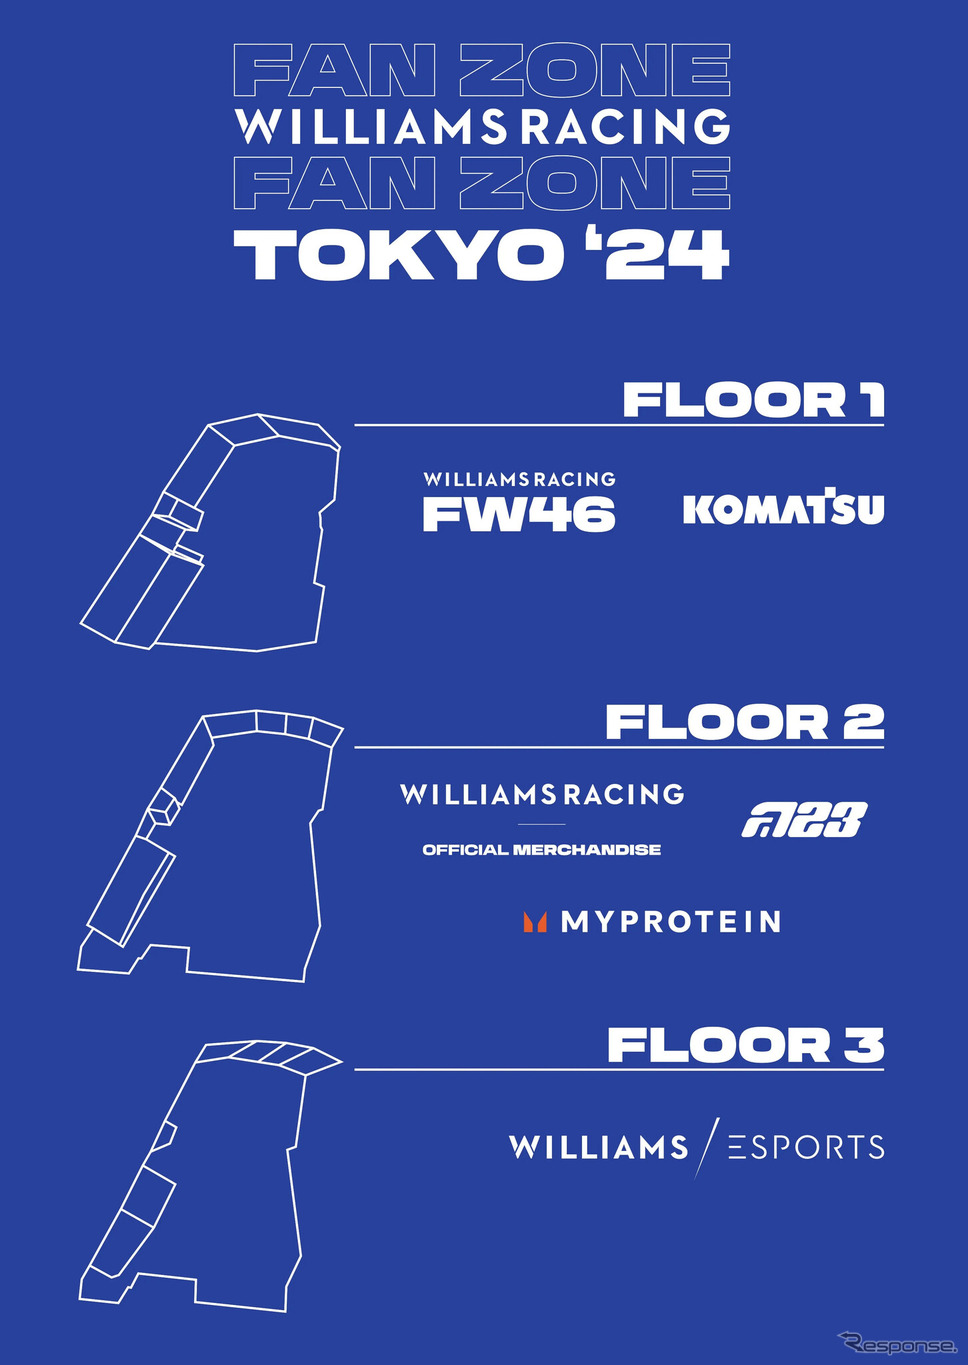 「Williams Racing Fan Zone」が東京・渋谷で開催《画像提供 Williams Racing》